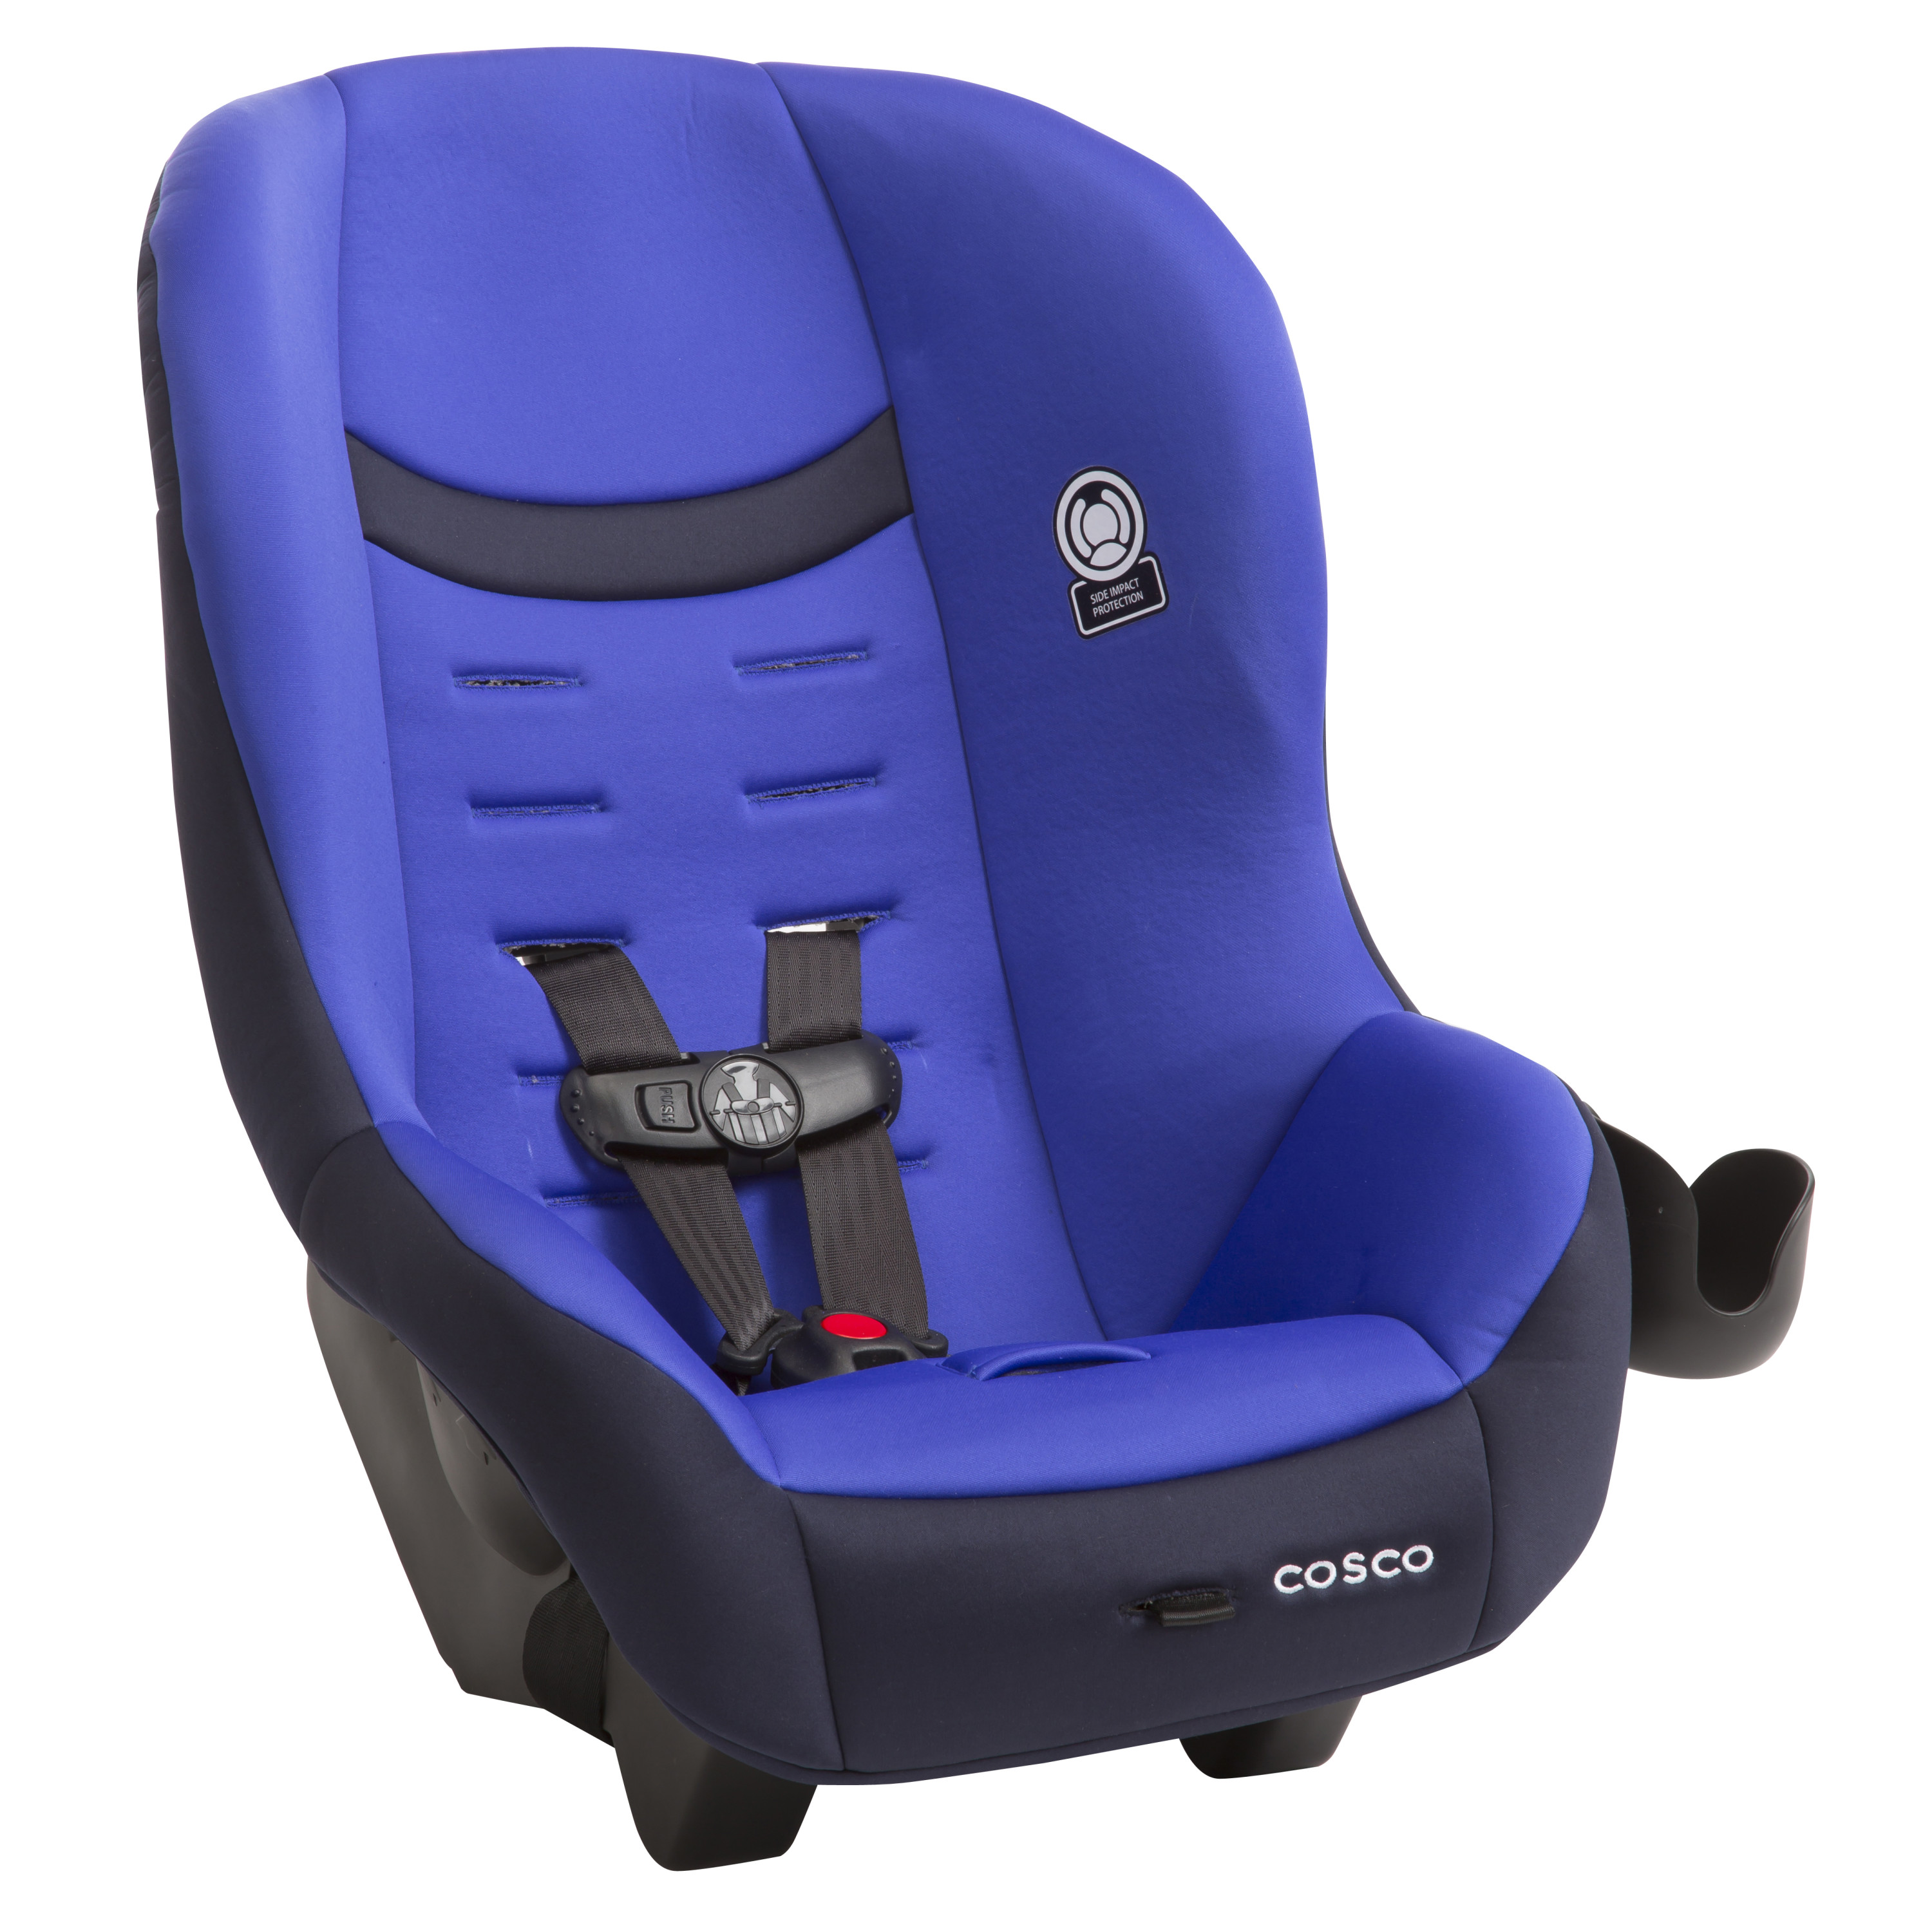 Cosco Scenera Convertible Car Seat, Solid Print Blue - image 2 of 7